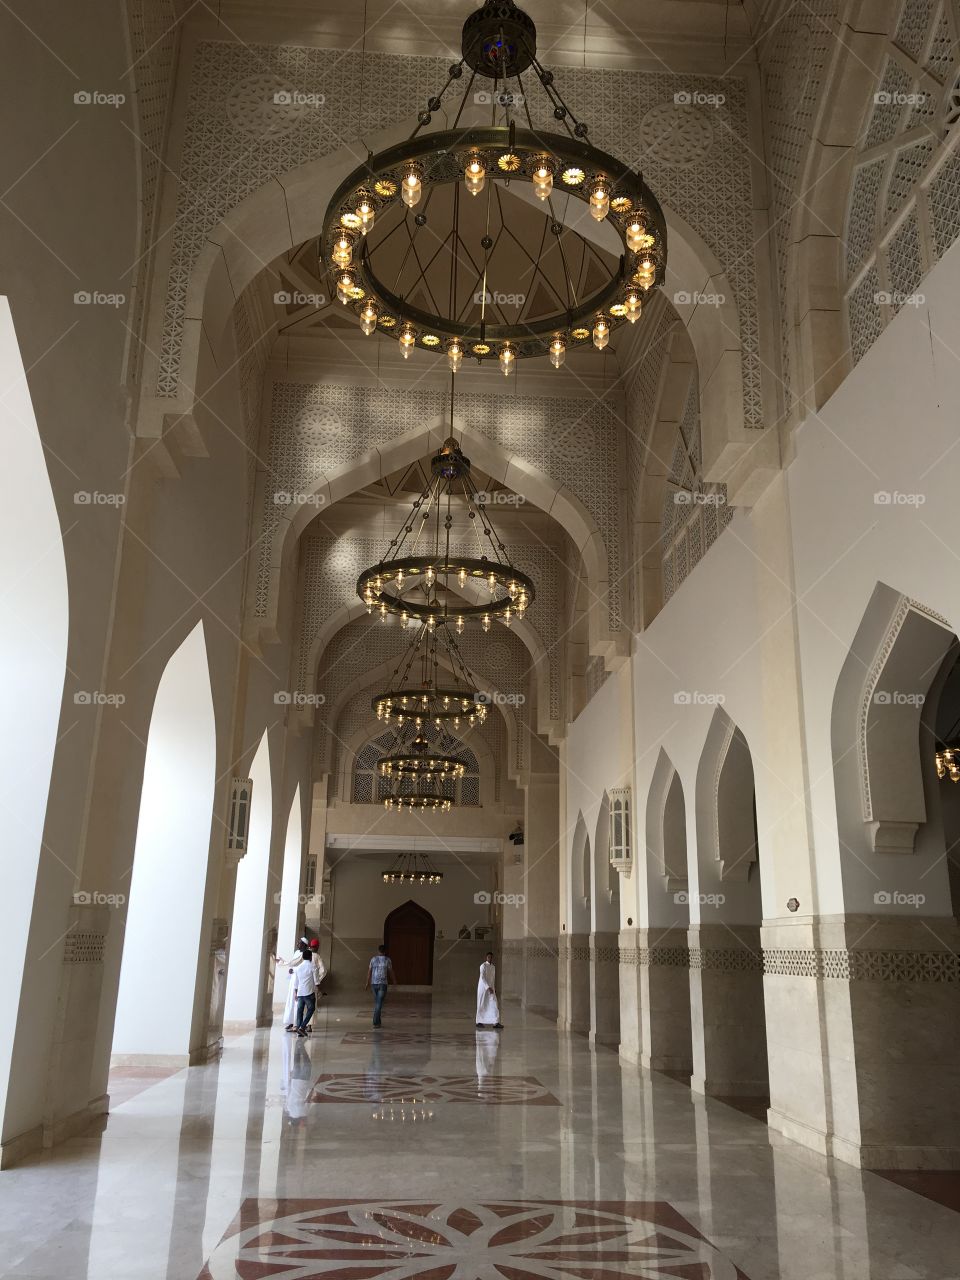 Inside the masjid